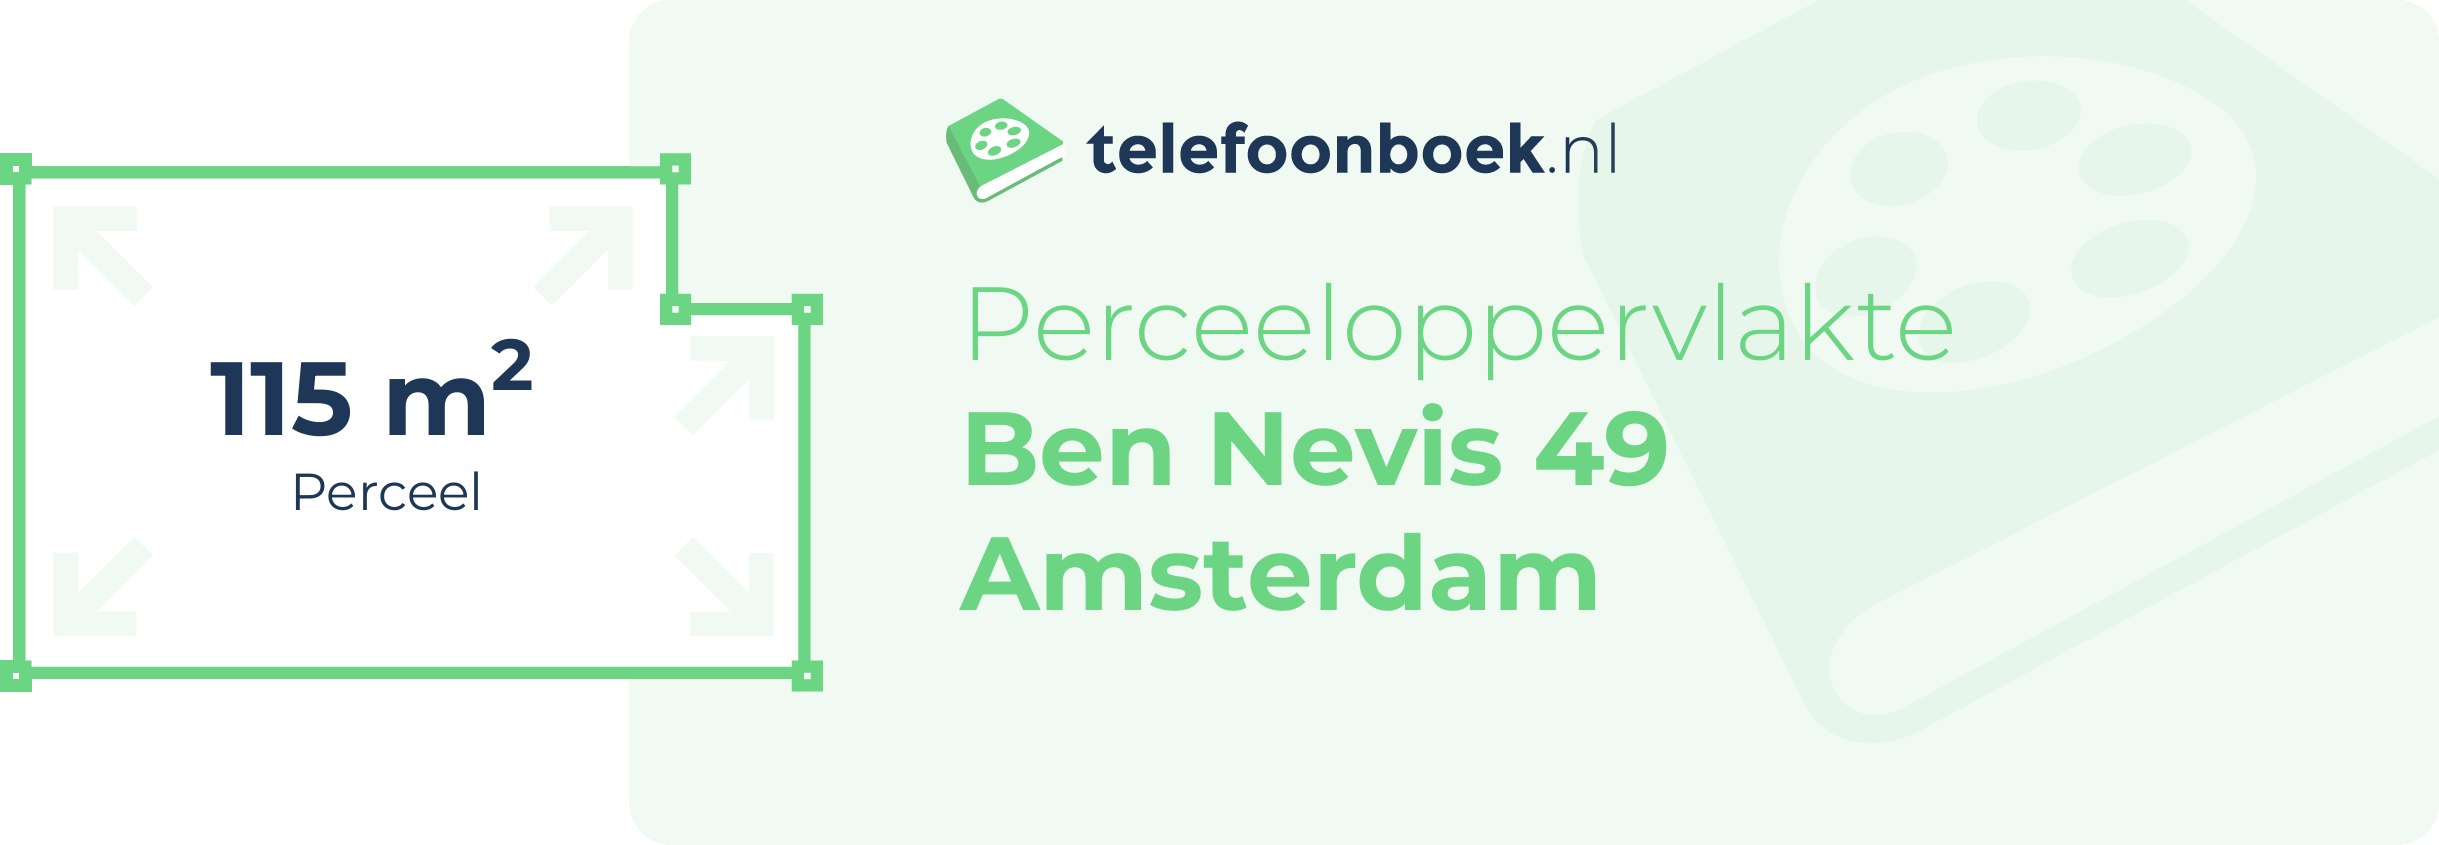 Perceeloppervlakte Ben Nevis 49 Amsterdam